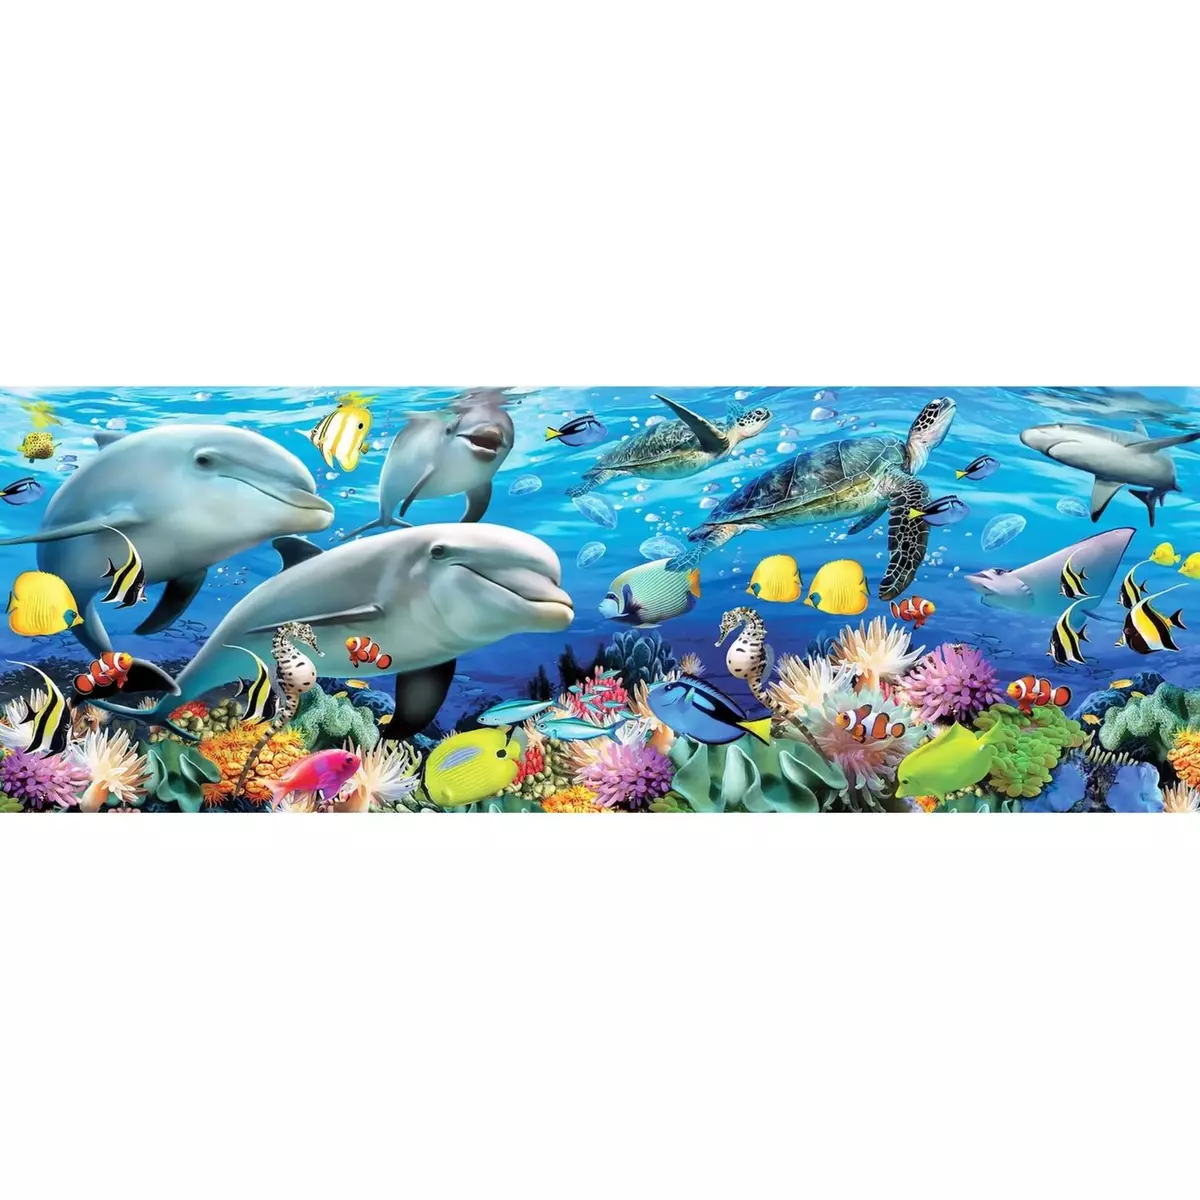 PERRE / ANATOLIAN Puzzle 1000 pièces panoramique : Undersea